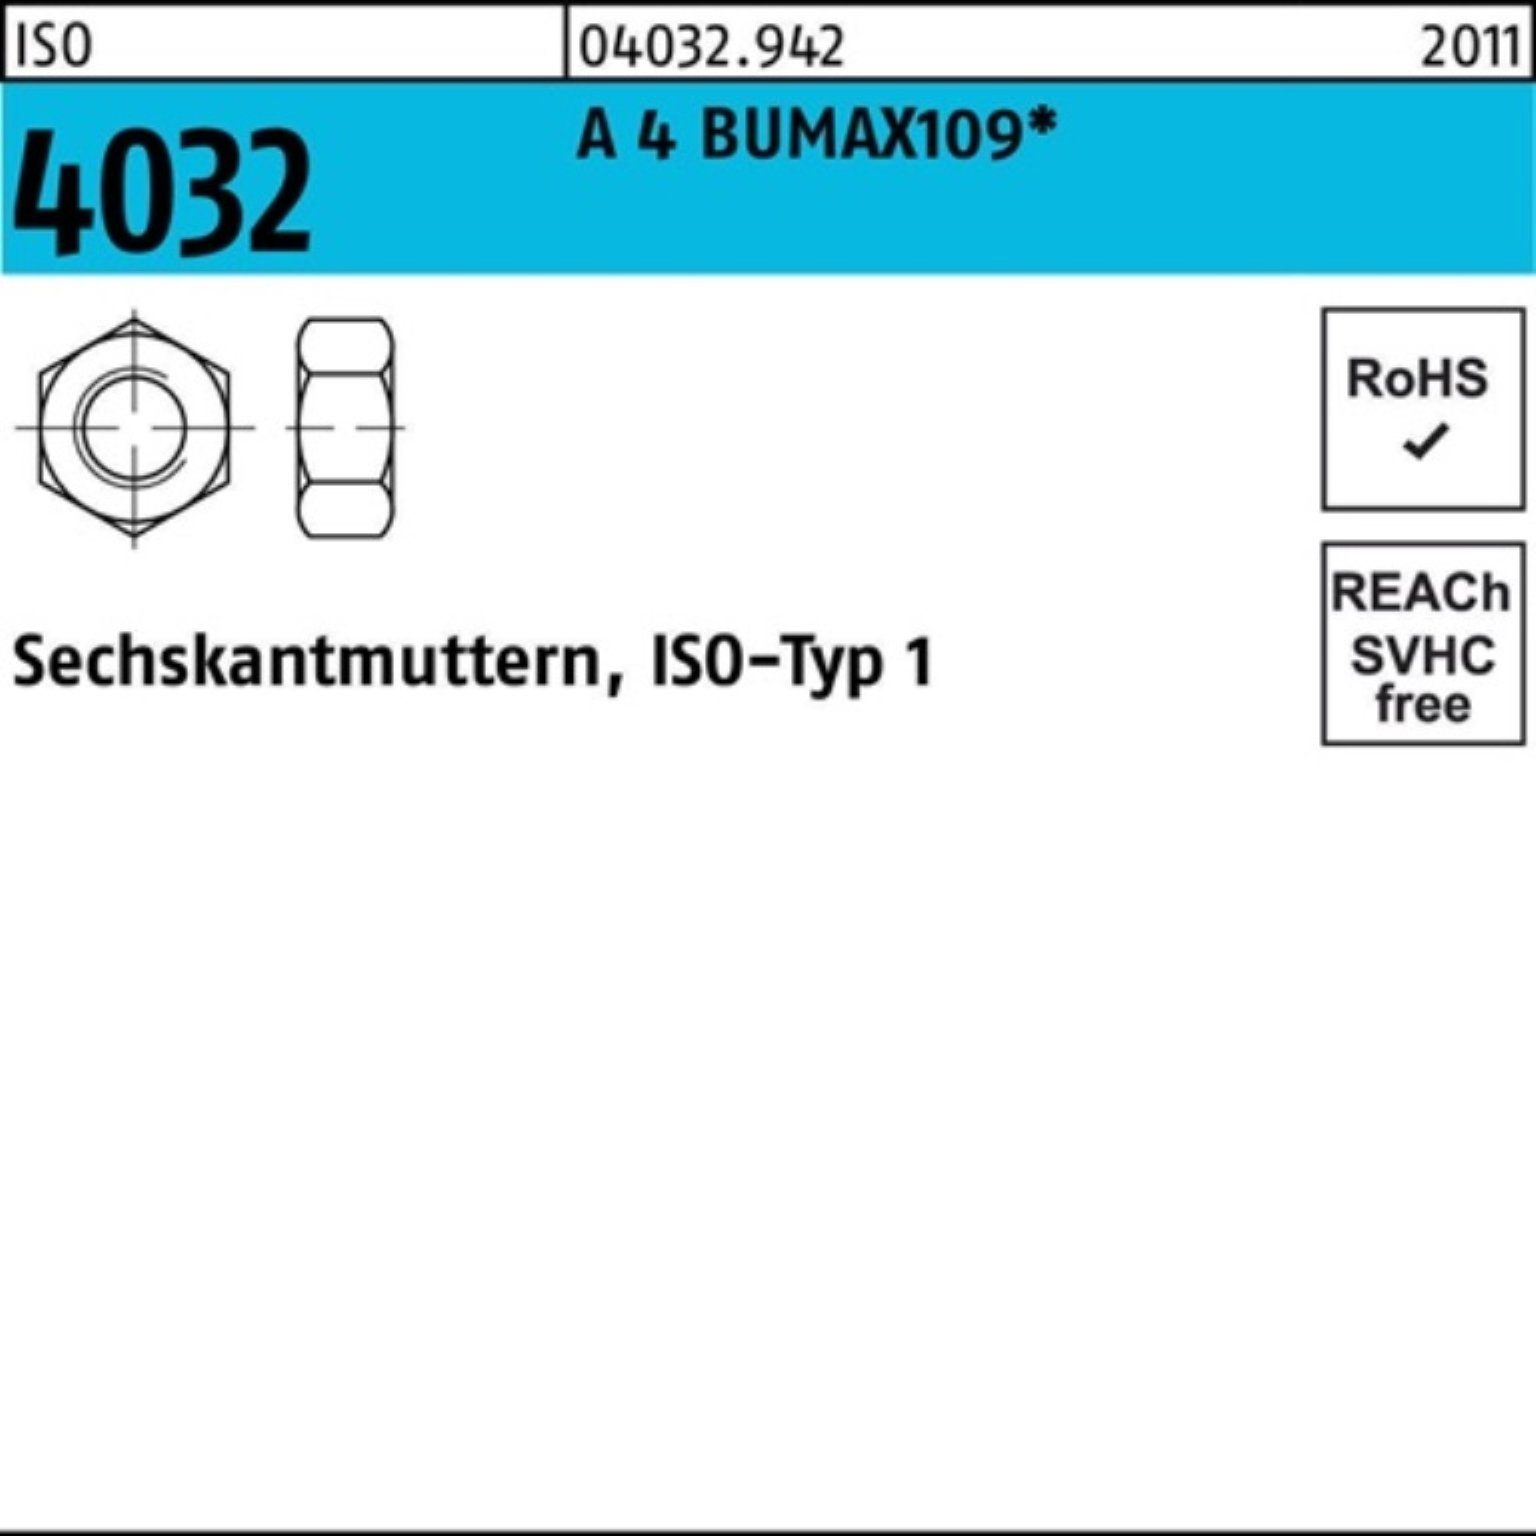 Bufab 100 A Muttern Stück BUMAX109 I BUFAB ISO 100er 4 M6 4032 Sechskantmutter Pack